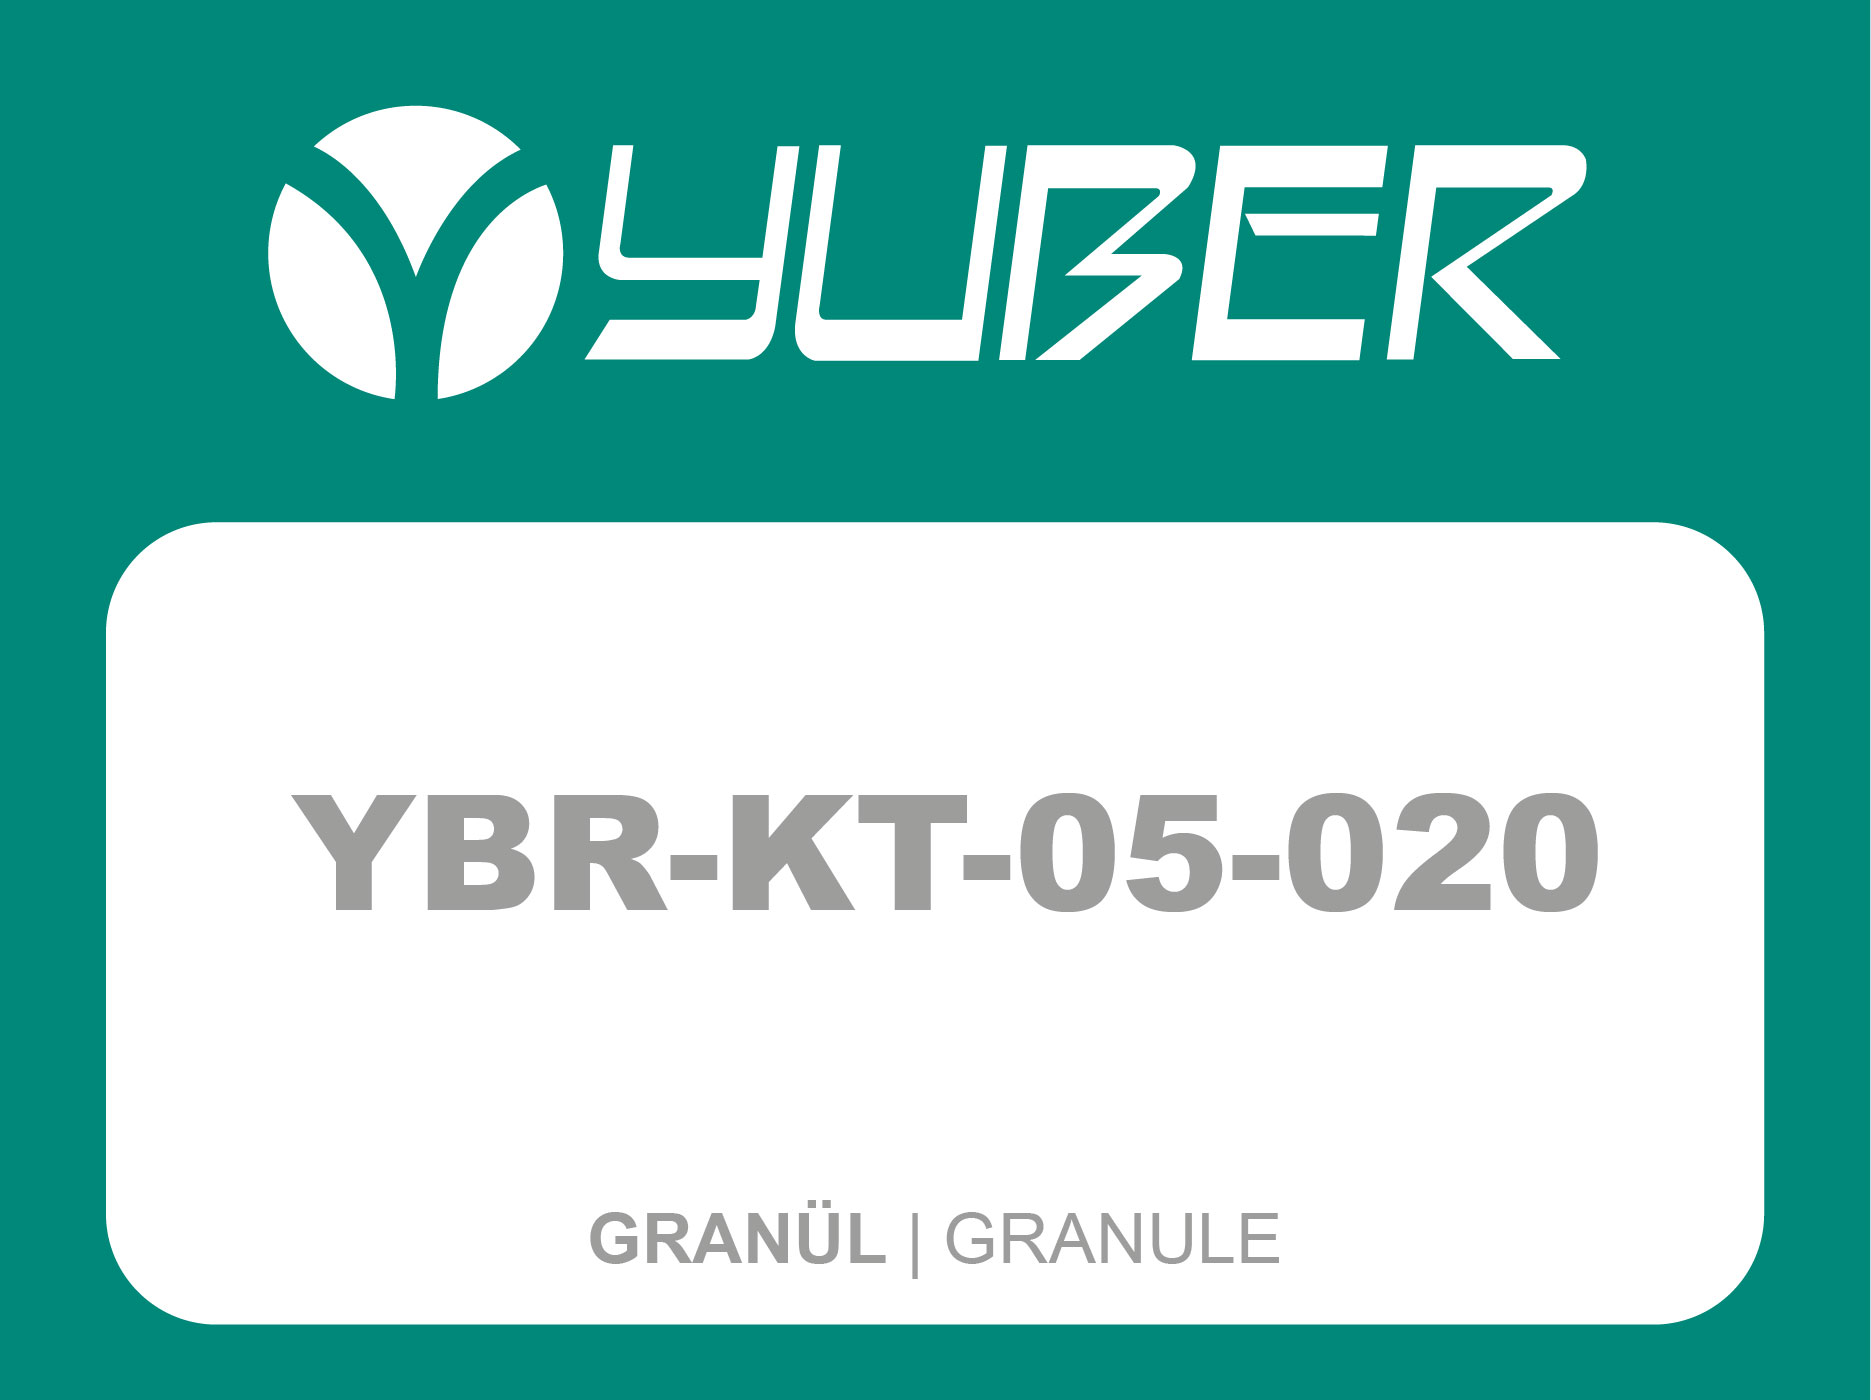 YBR KT 05 020 Granule Yuber Metallurgy